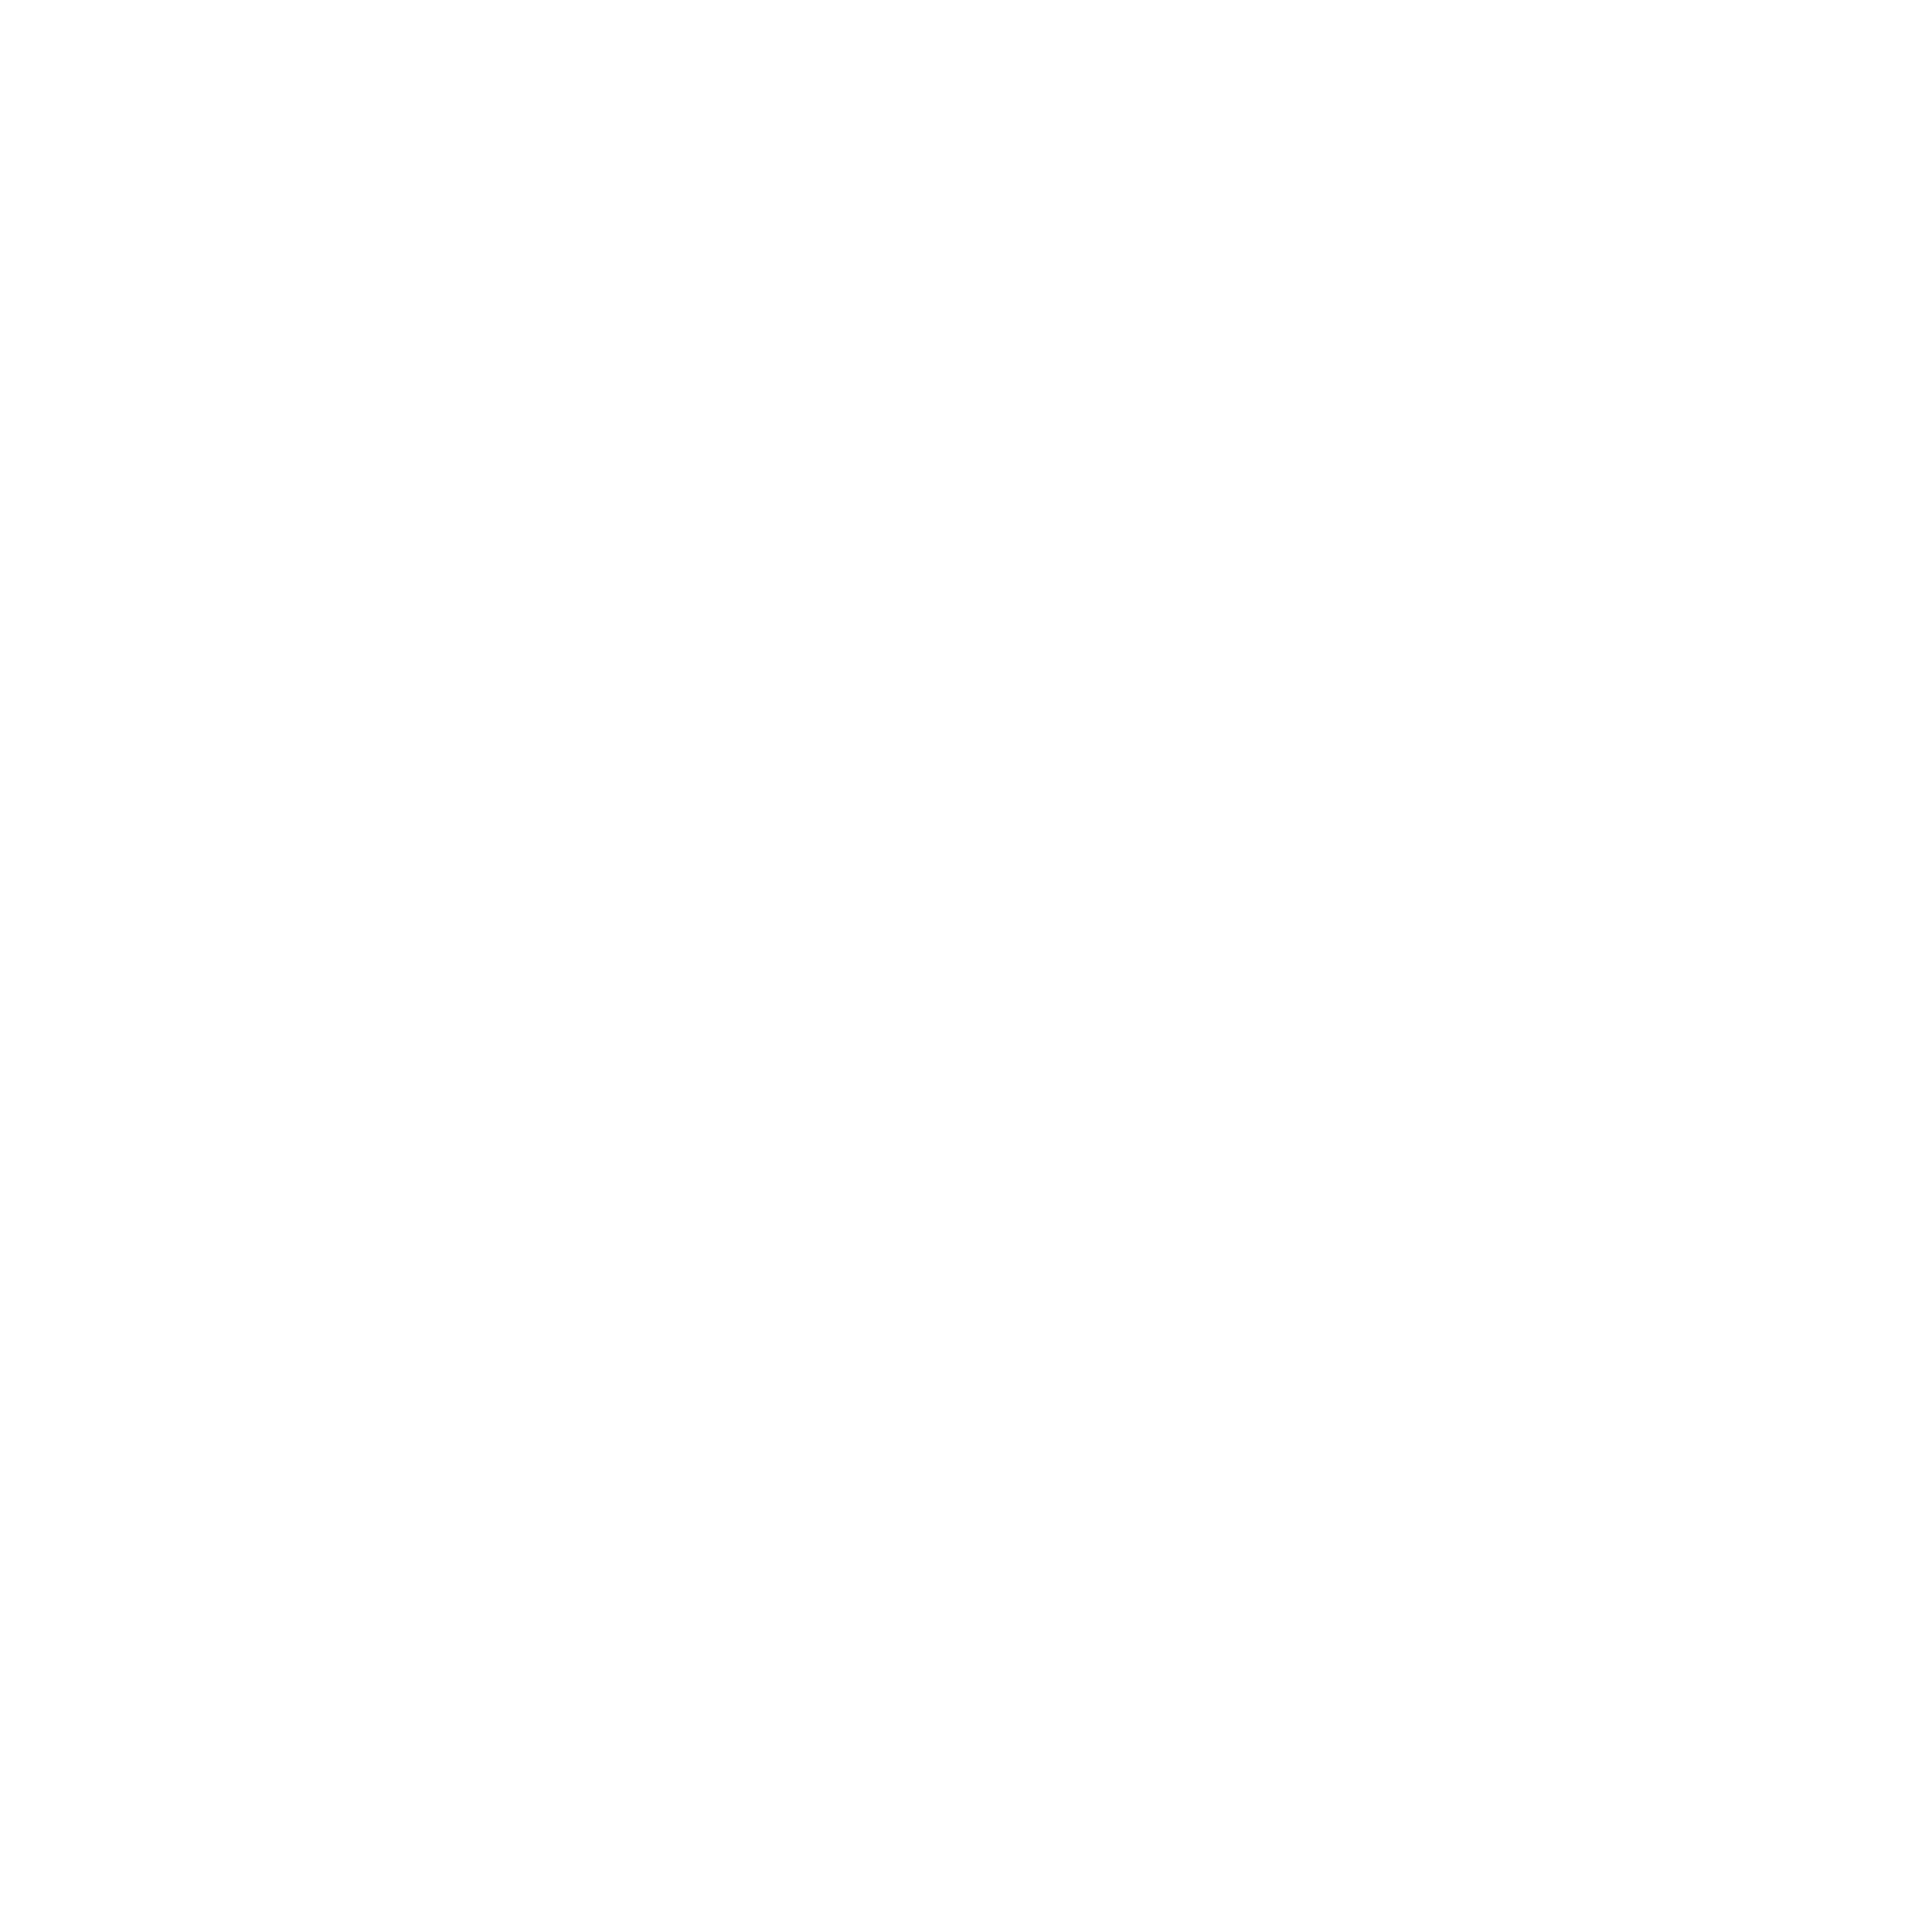 sailing boat icon